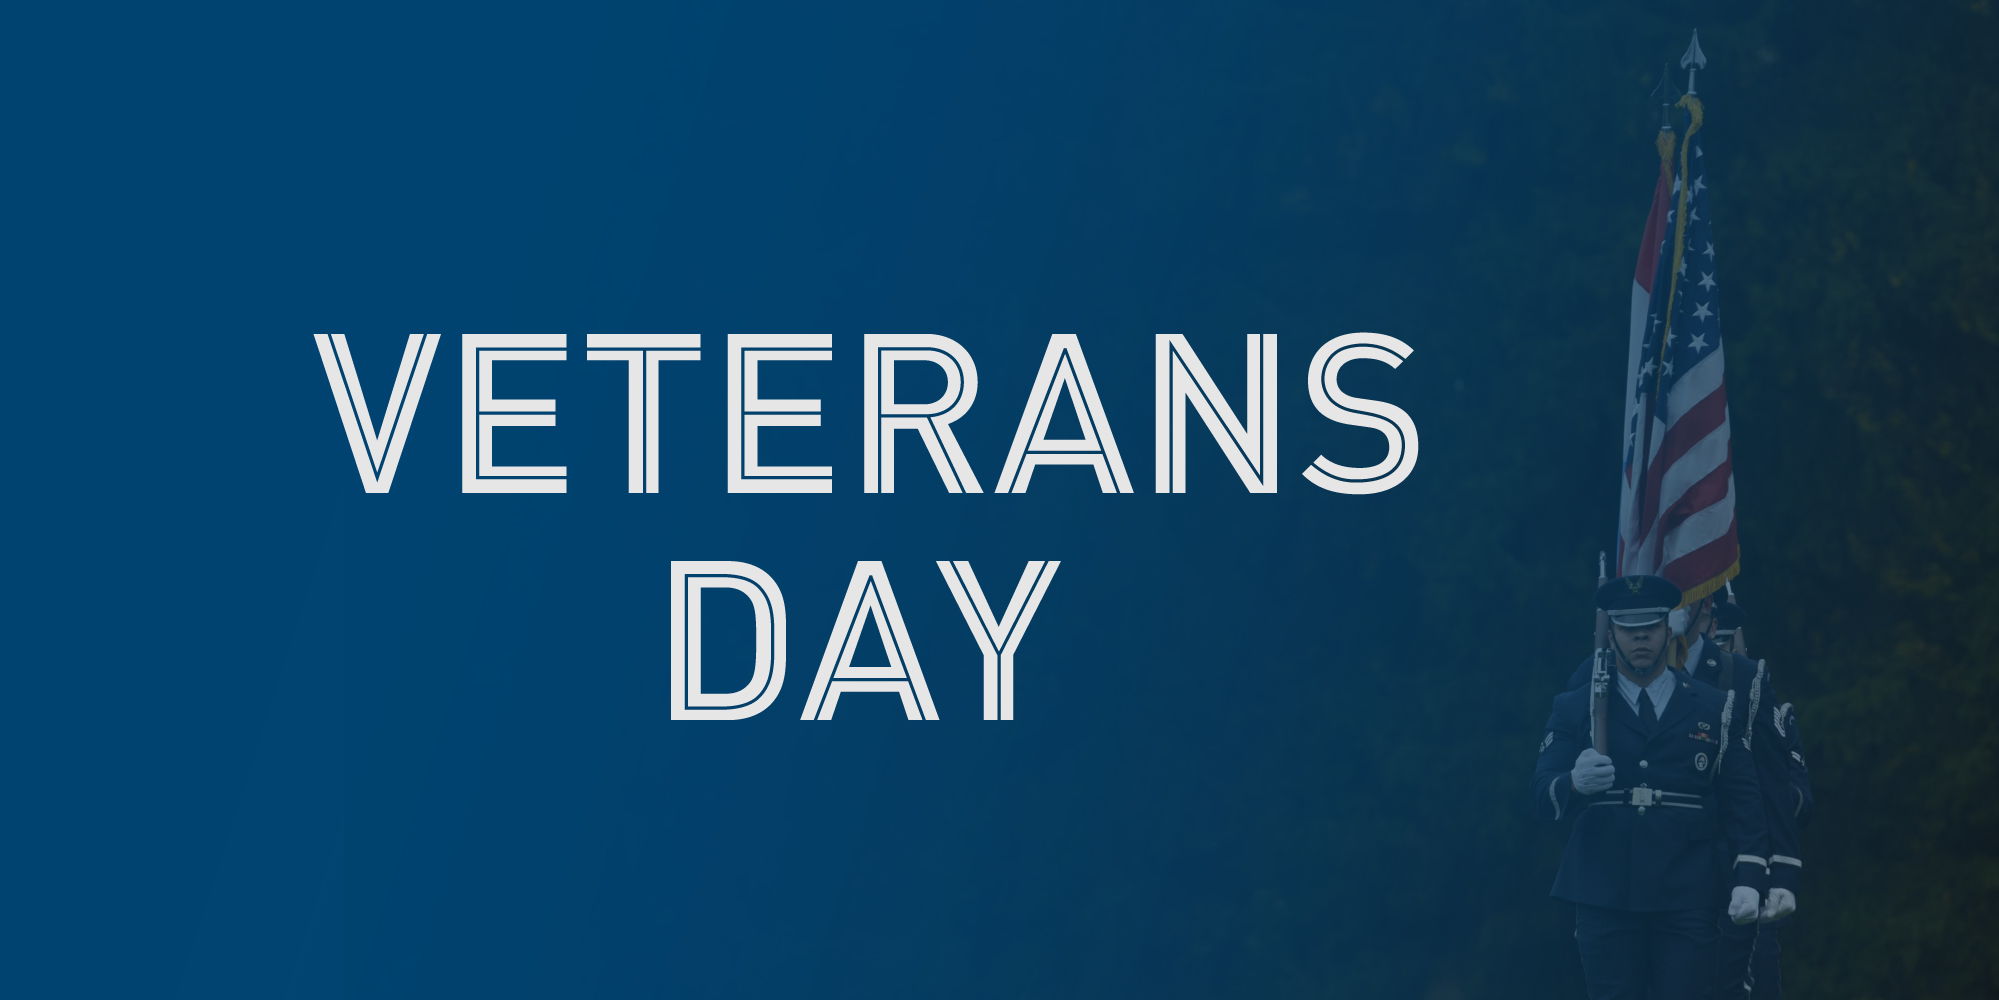 Veterans Day Program  promotional image